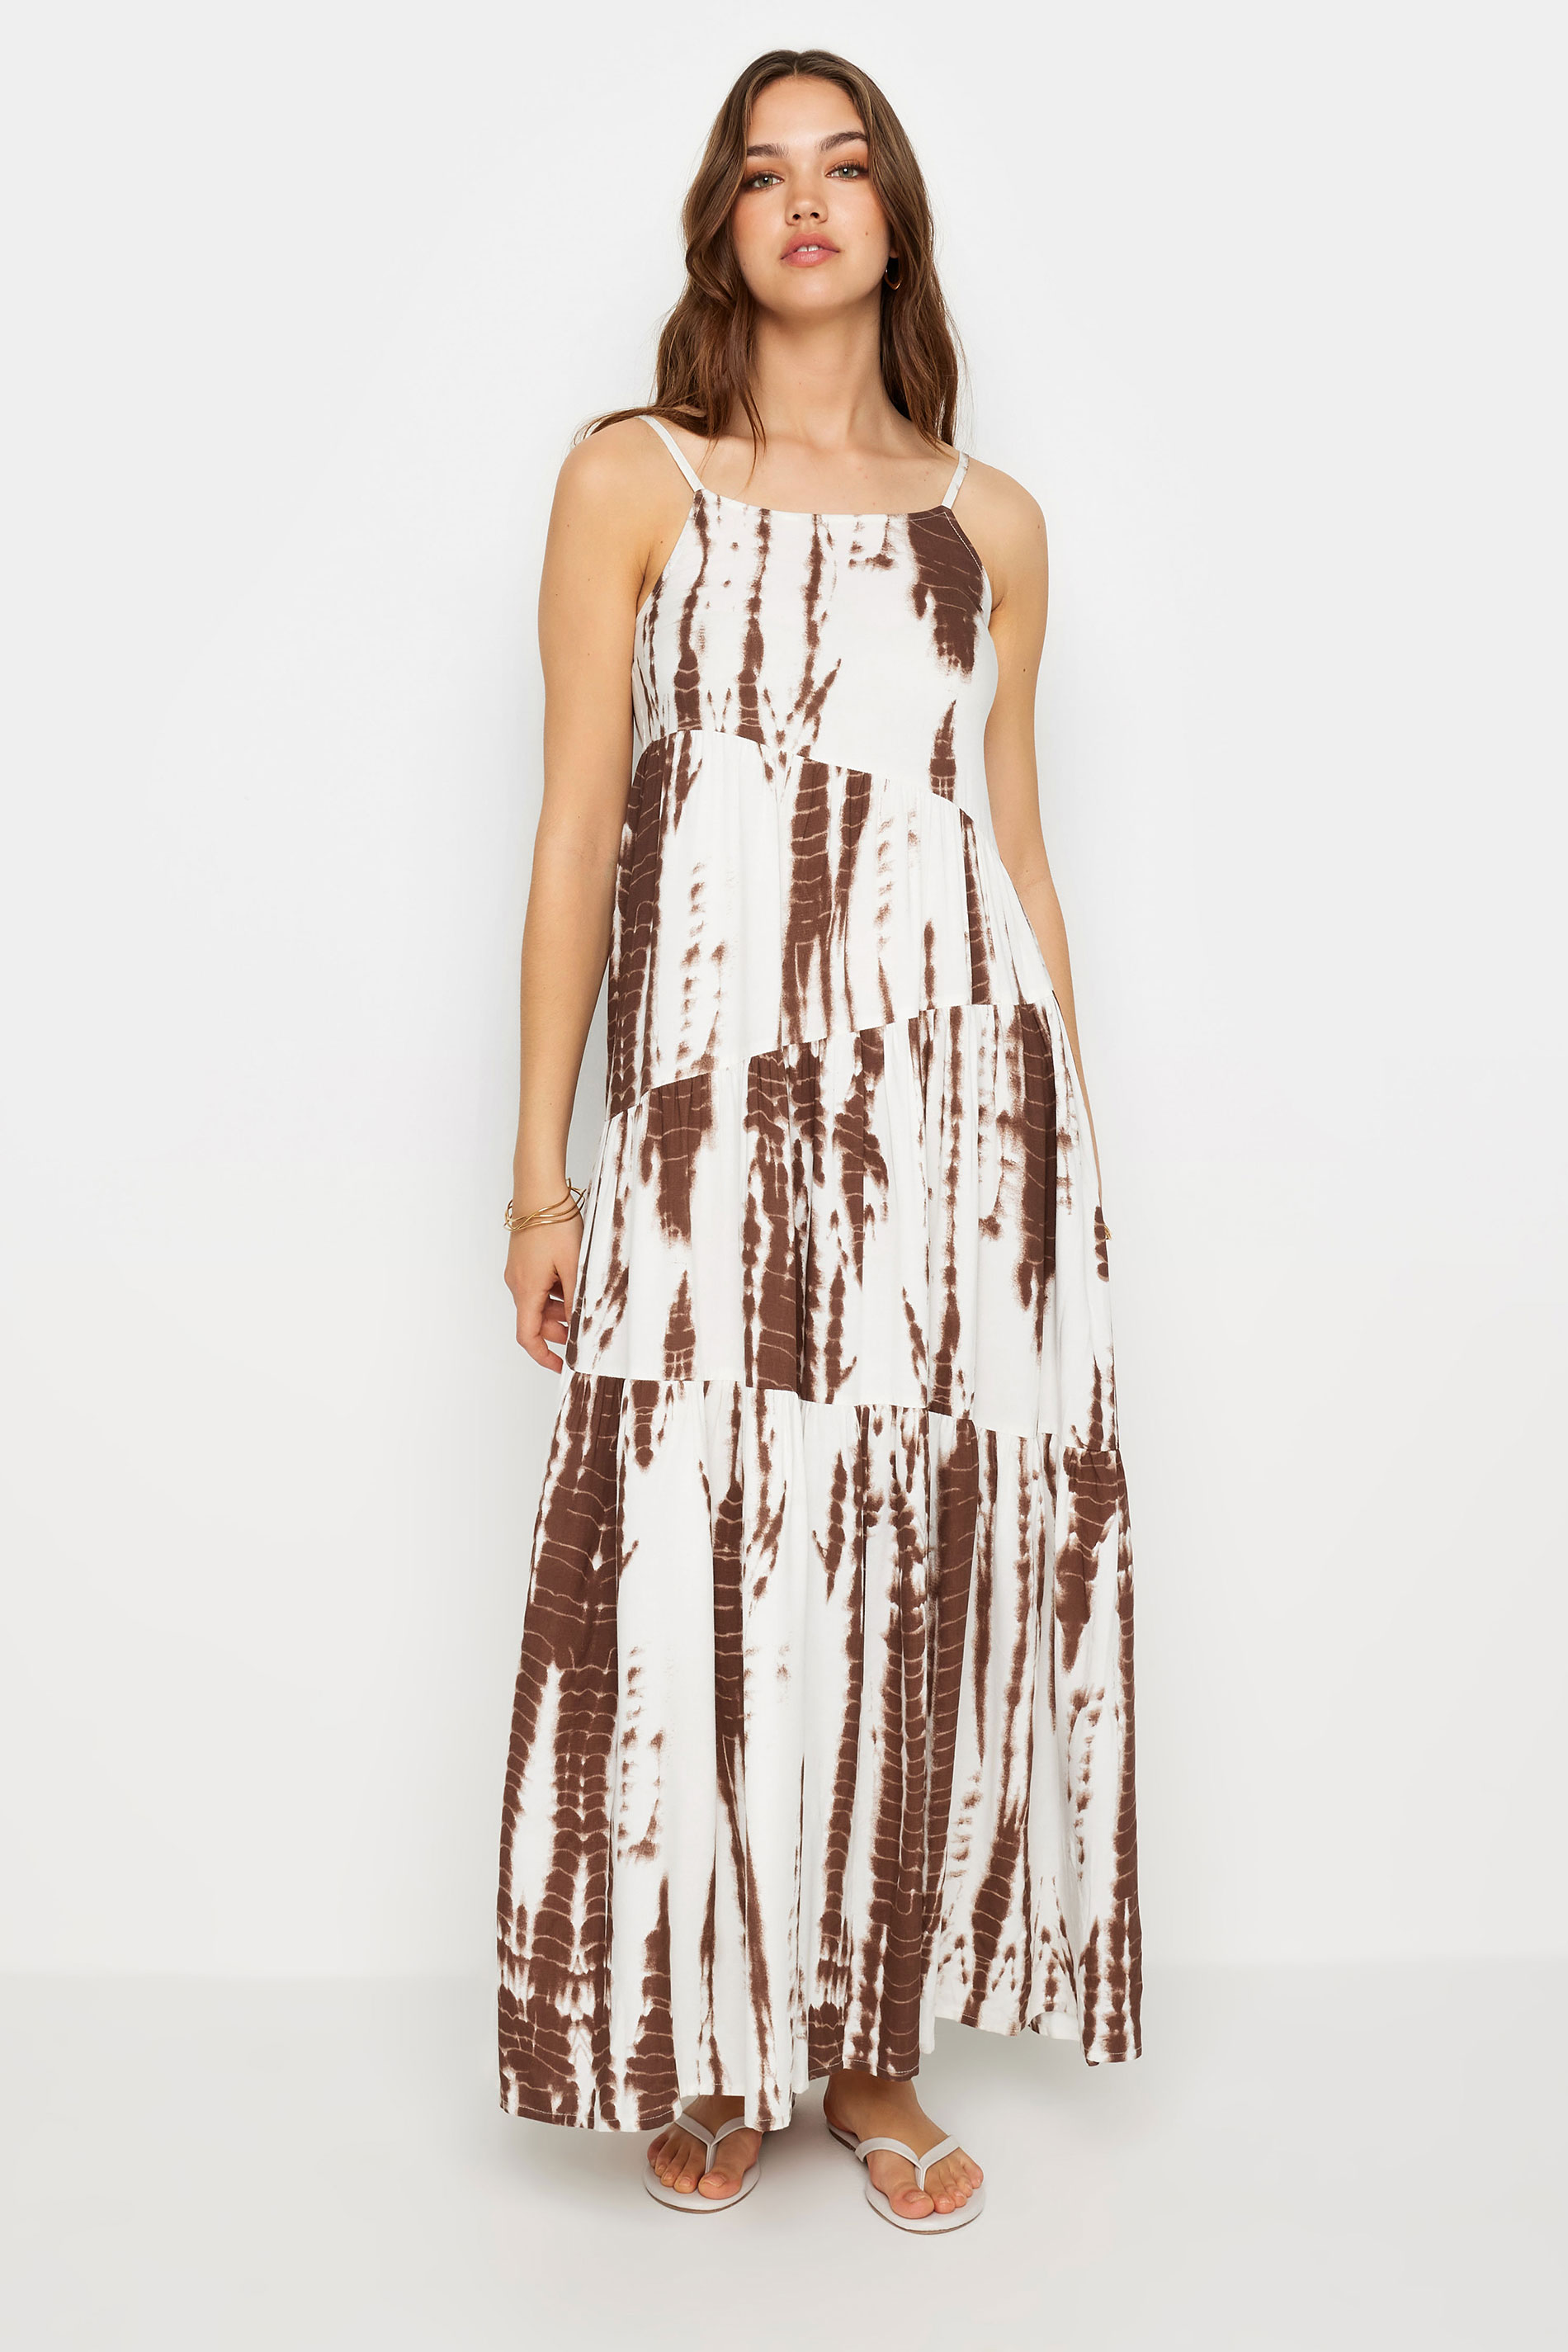 LTS Tall Women's Brown Tie Dye Strappy Maxi Dress | Long Tall Sally 2